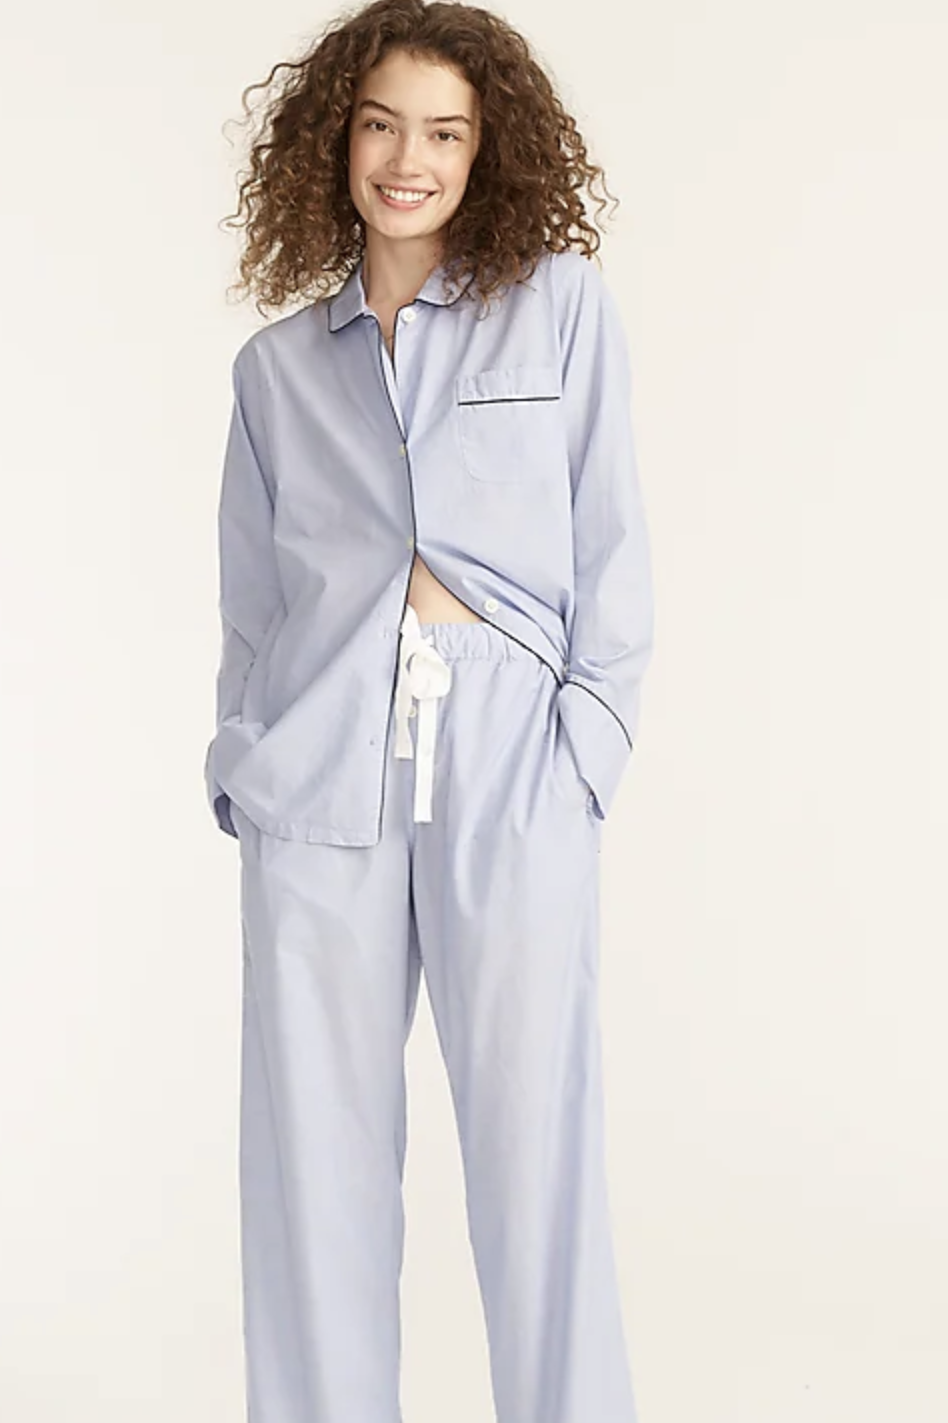 Plus Size Cute Pajamas Set, Women's Plus Cloud Print Long Sleeve Round Neck  Tee & Pants Lounge Two Piece Set